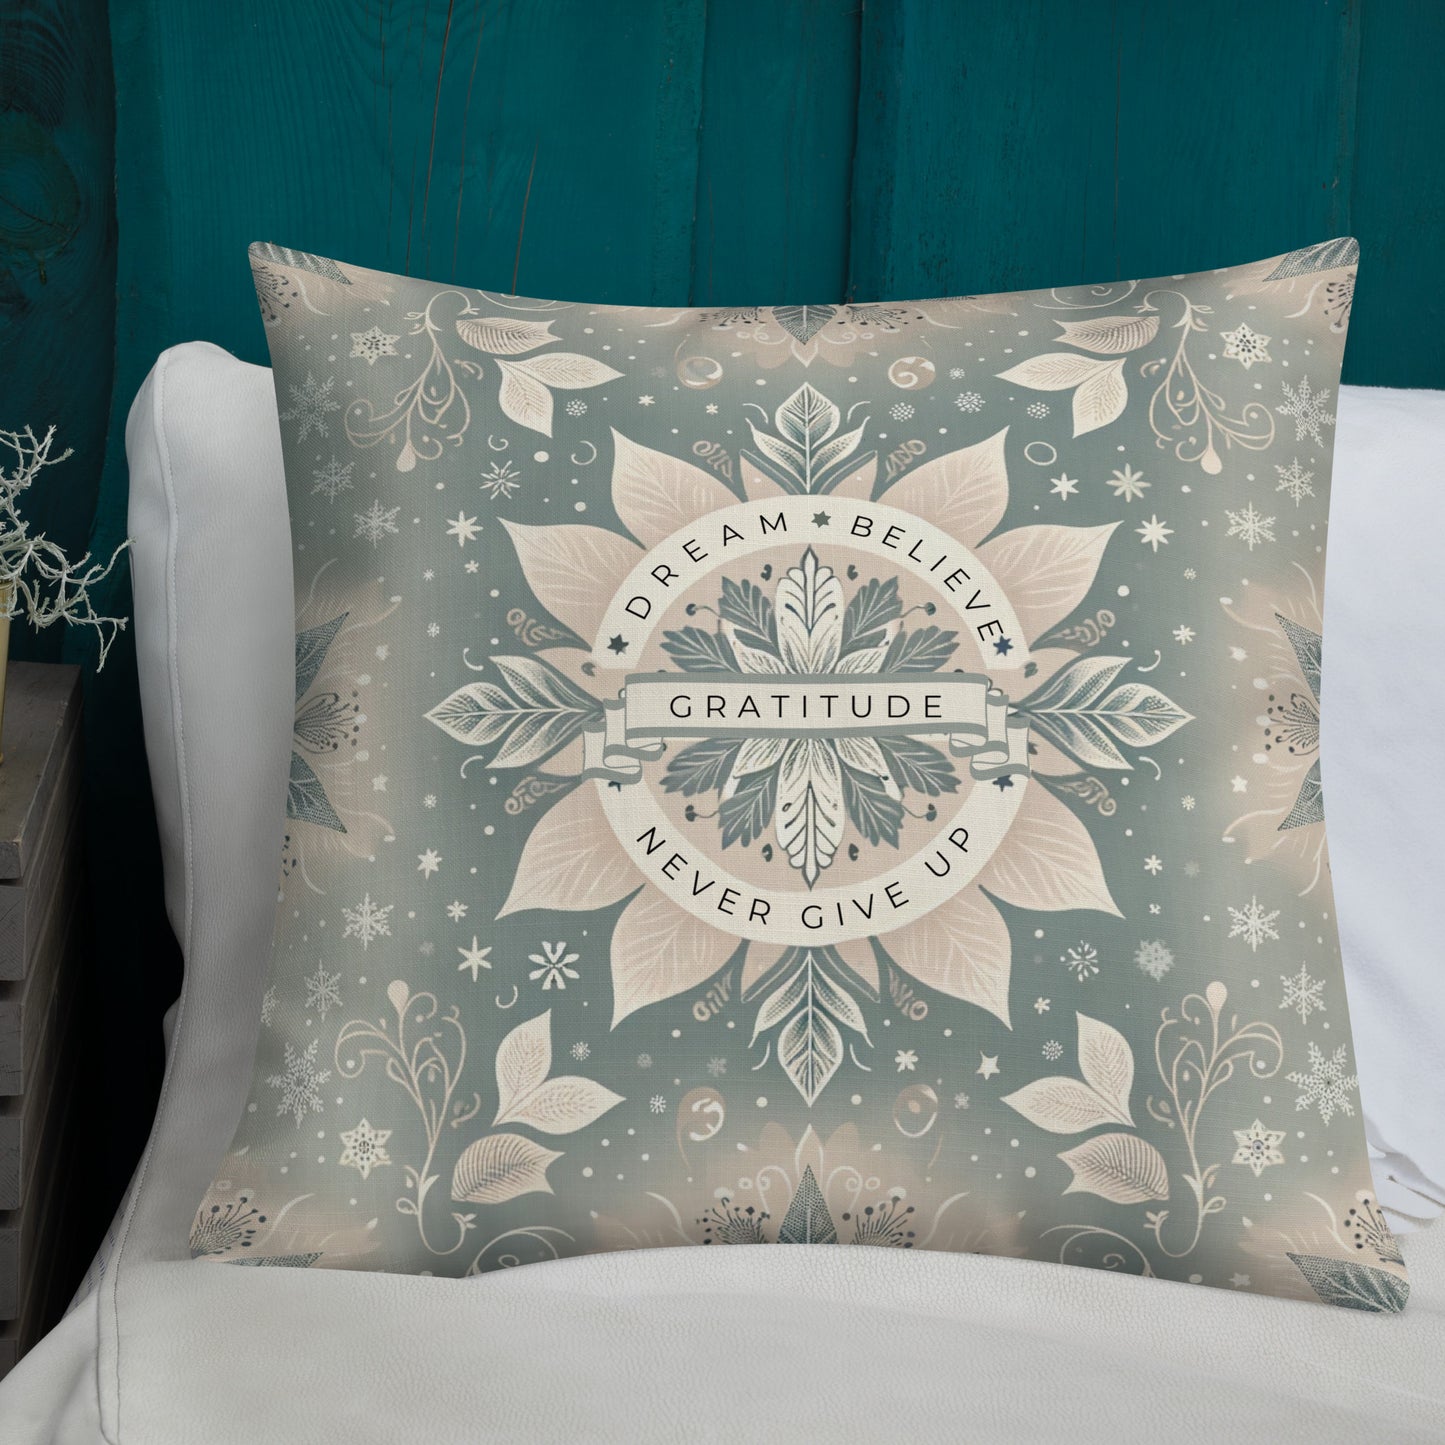 Winter Wonderland Inspirational Premium Pillow - 18x18 & 22x22 Sizes